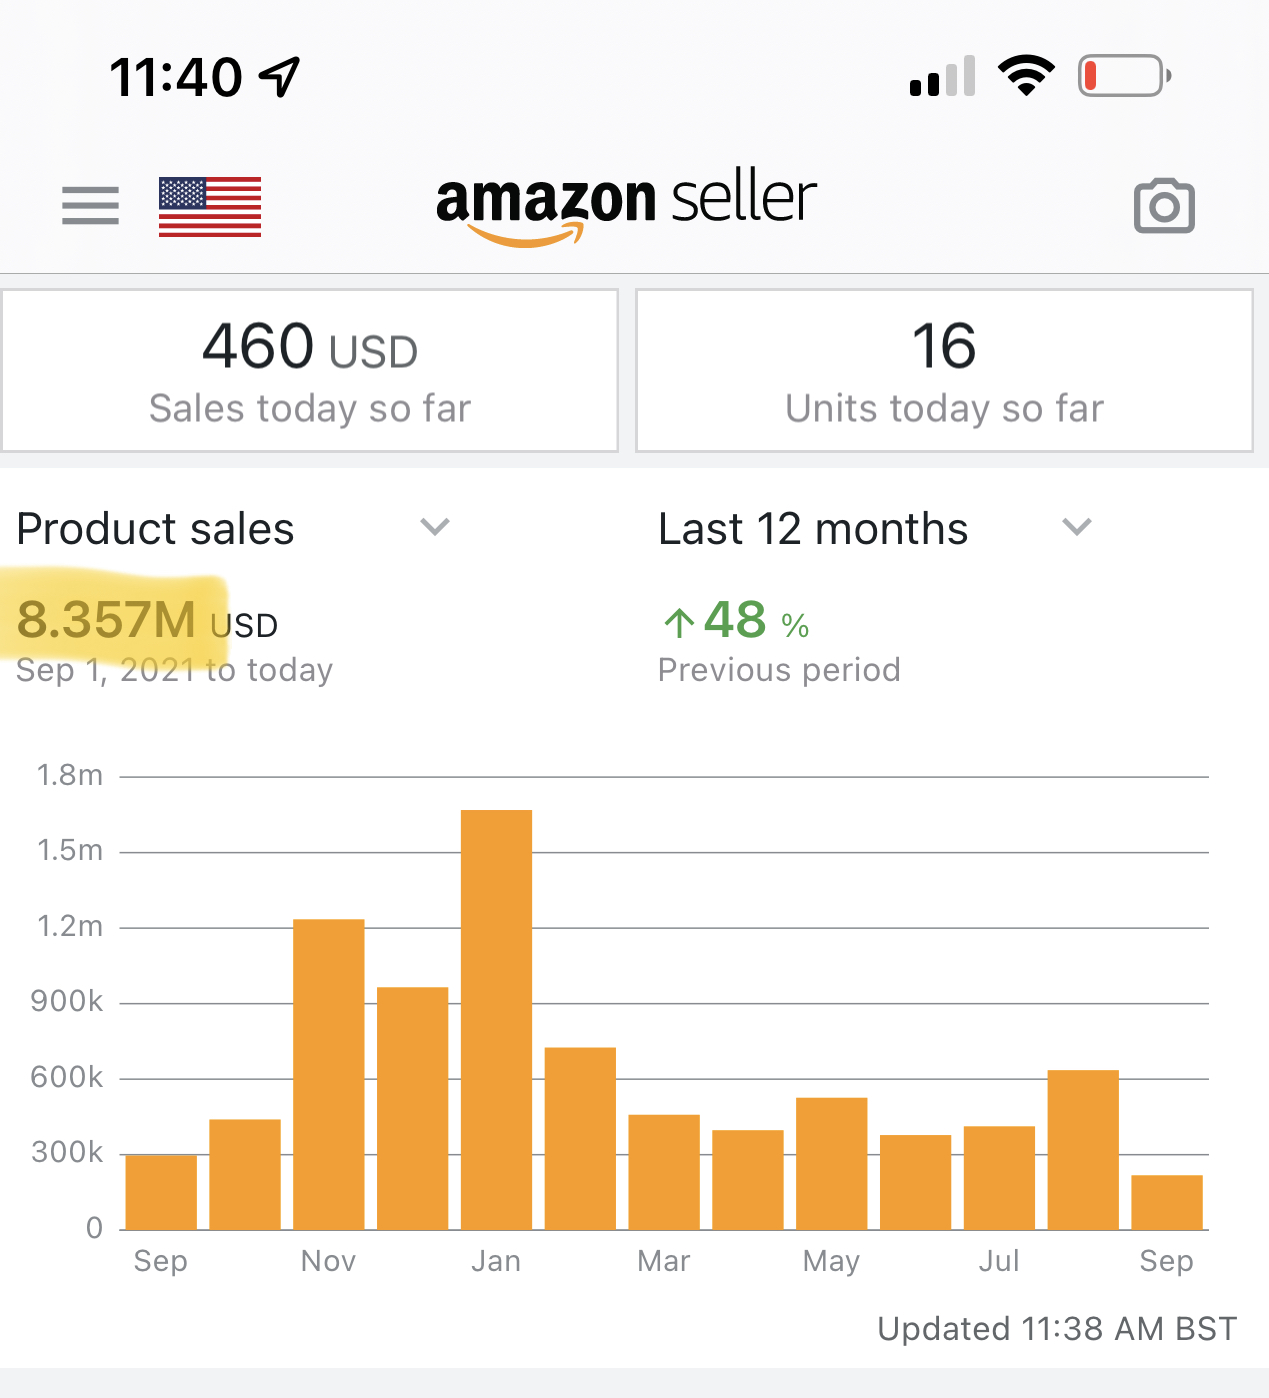 Amazon Seller making 8M per year